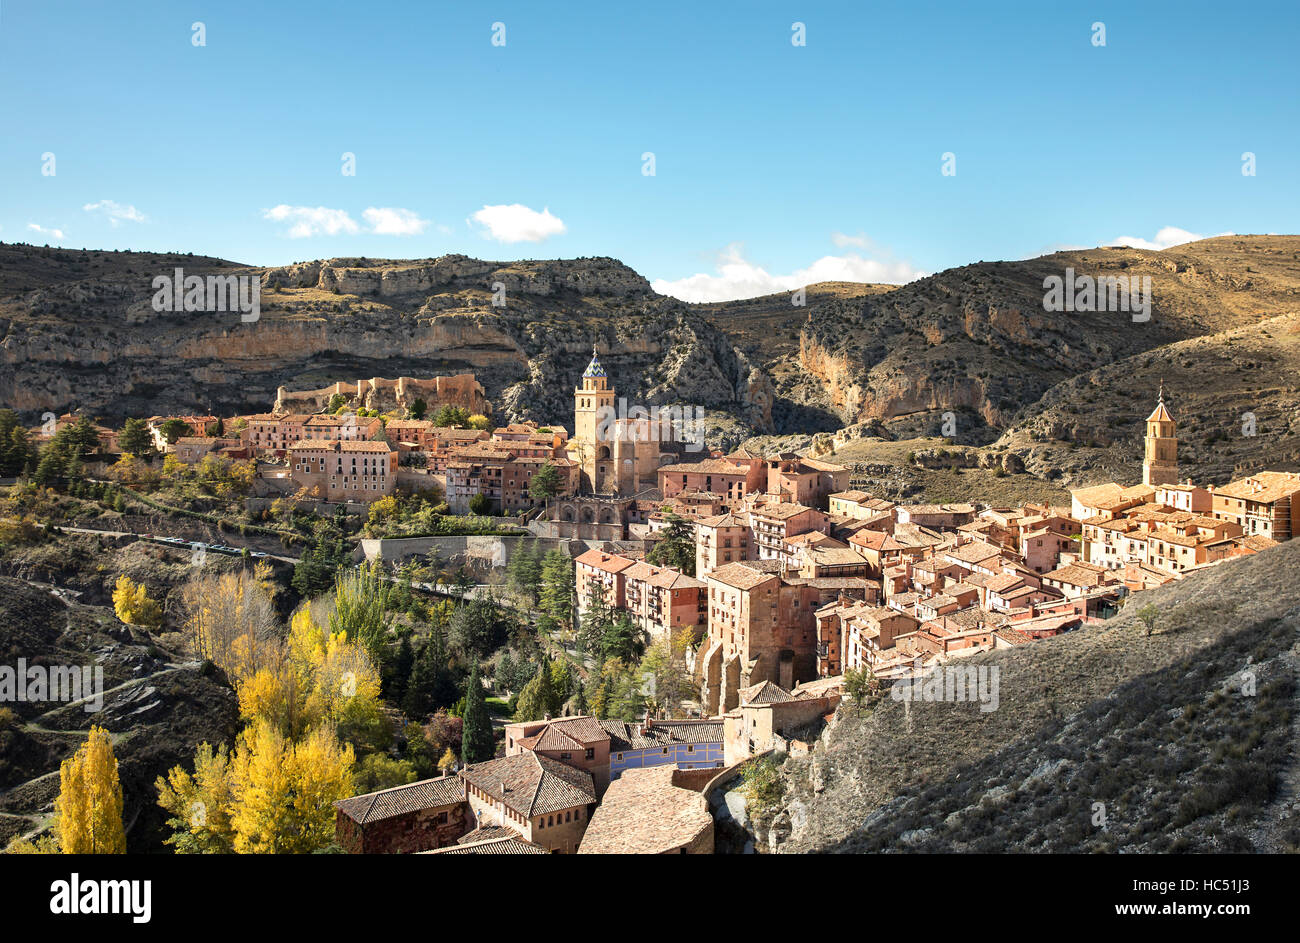 The town of Albarracin, Spain Stock Photo